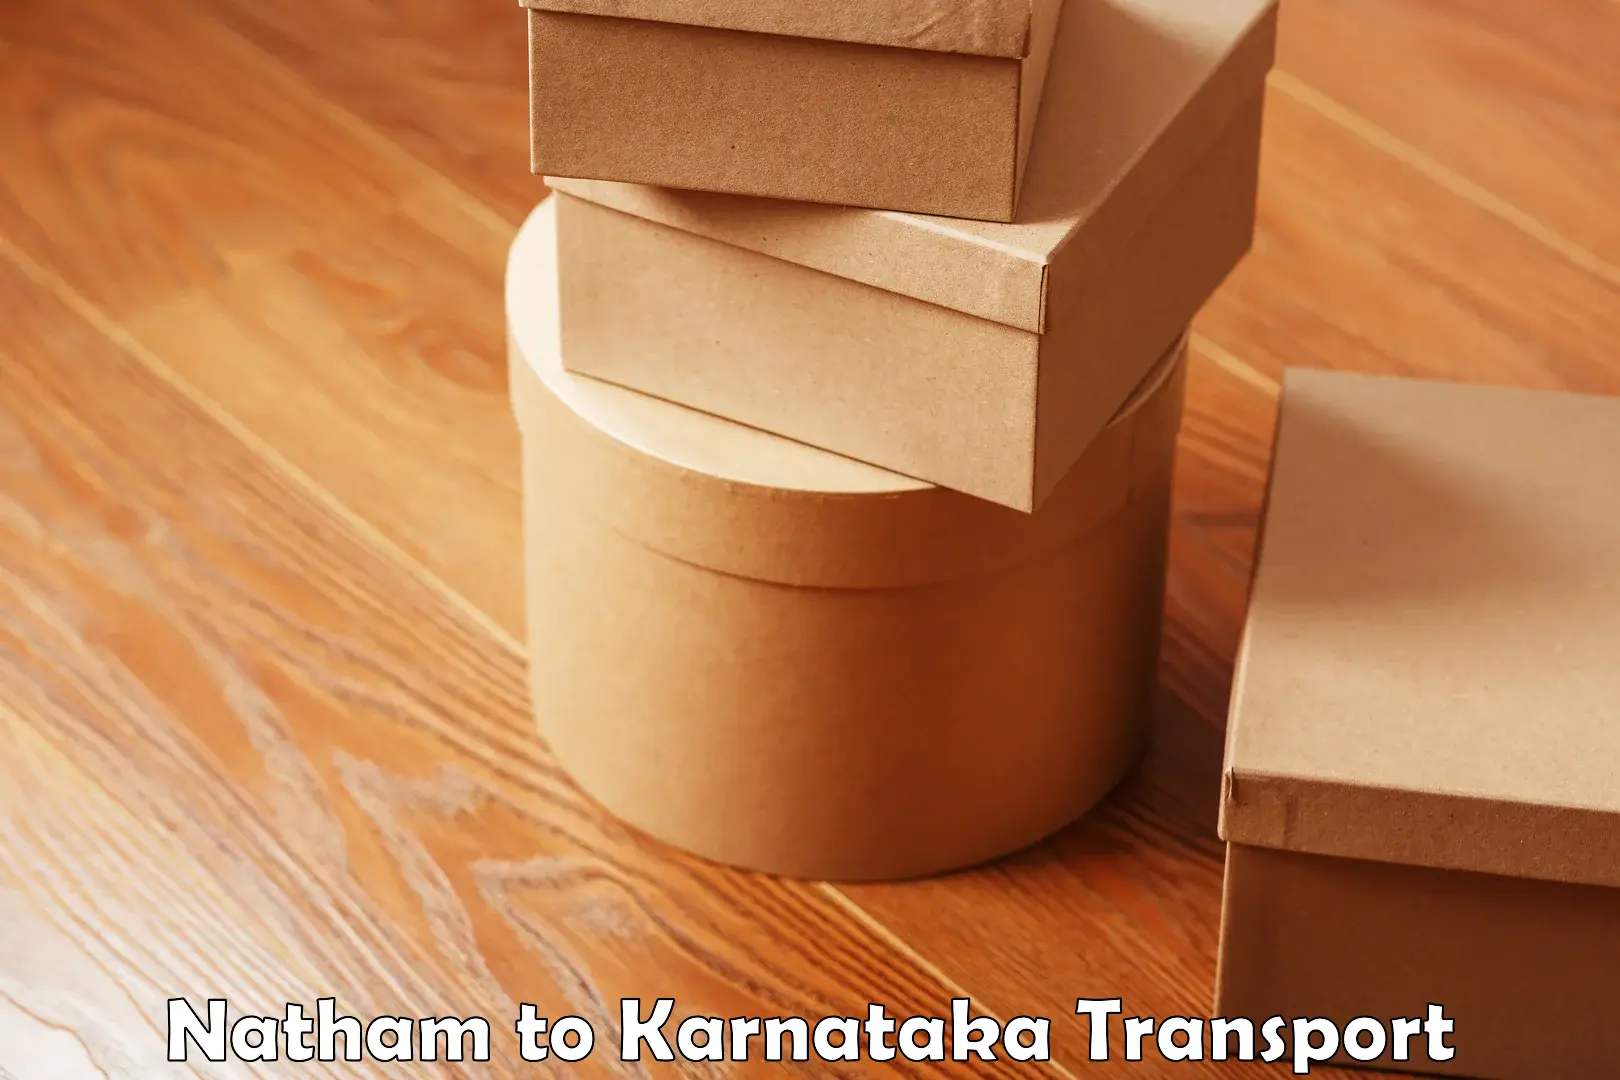 Shipping partner Natham to Karnataka